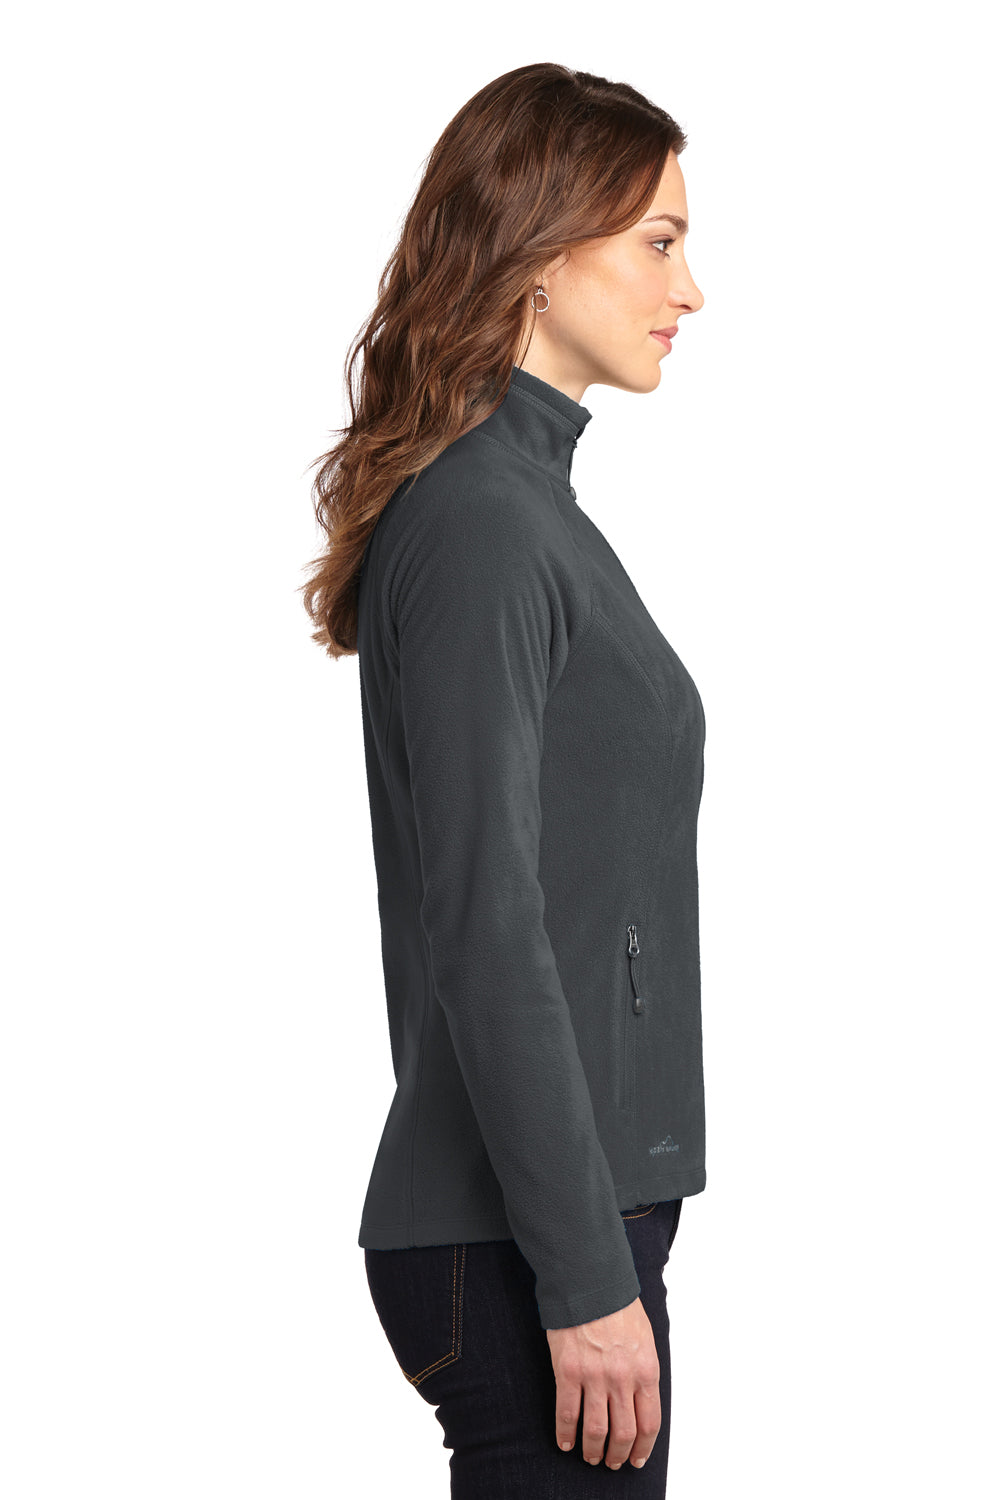 Eddie Bauer EB225 Womens Pill Resistant Microfleece Full Zip Jacket Steel Grey Model Side